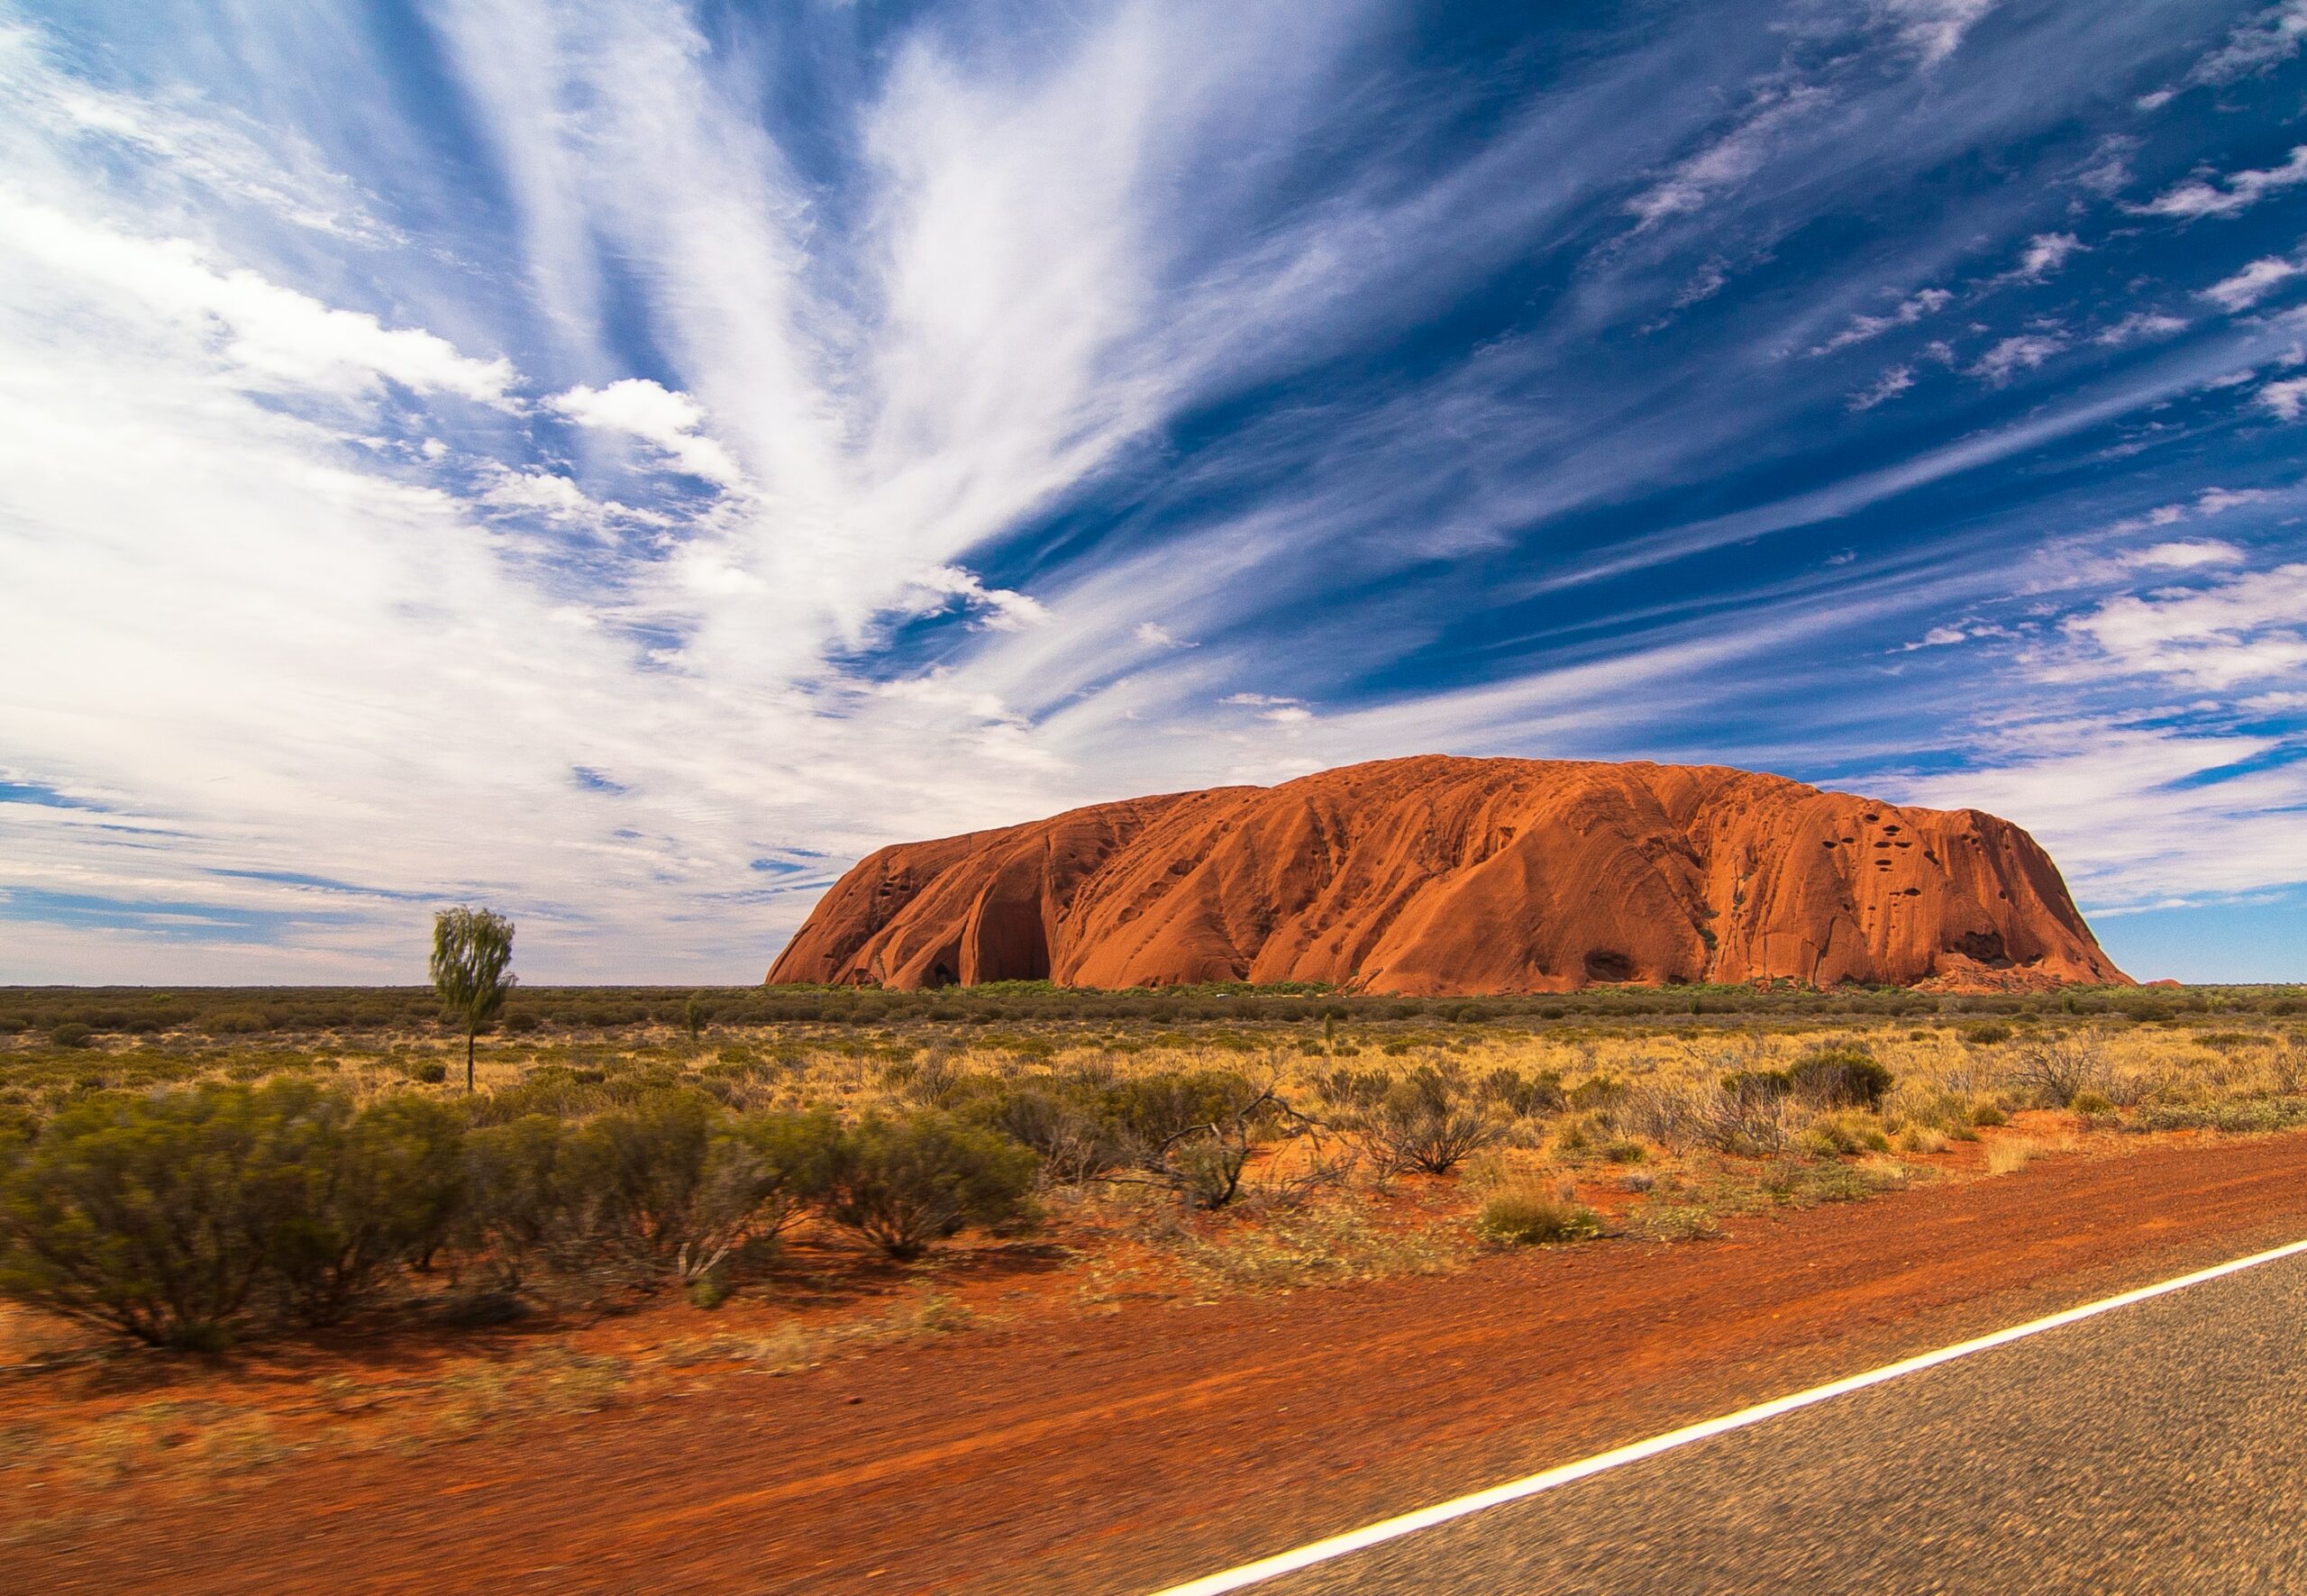 Can you climb Uluru